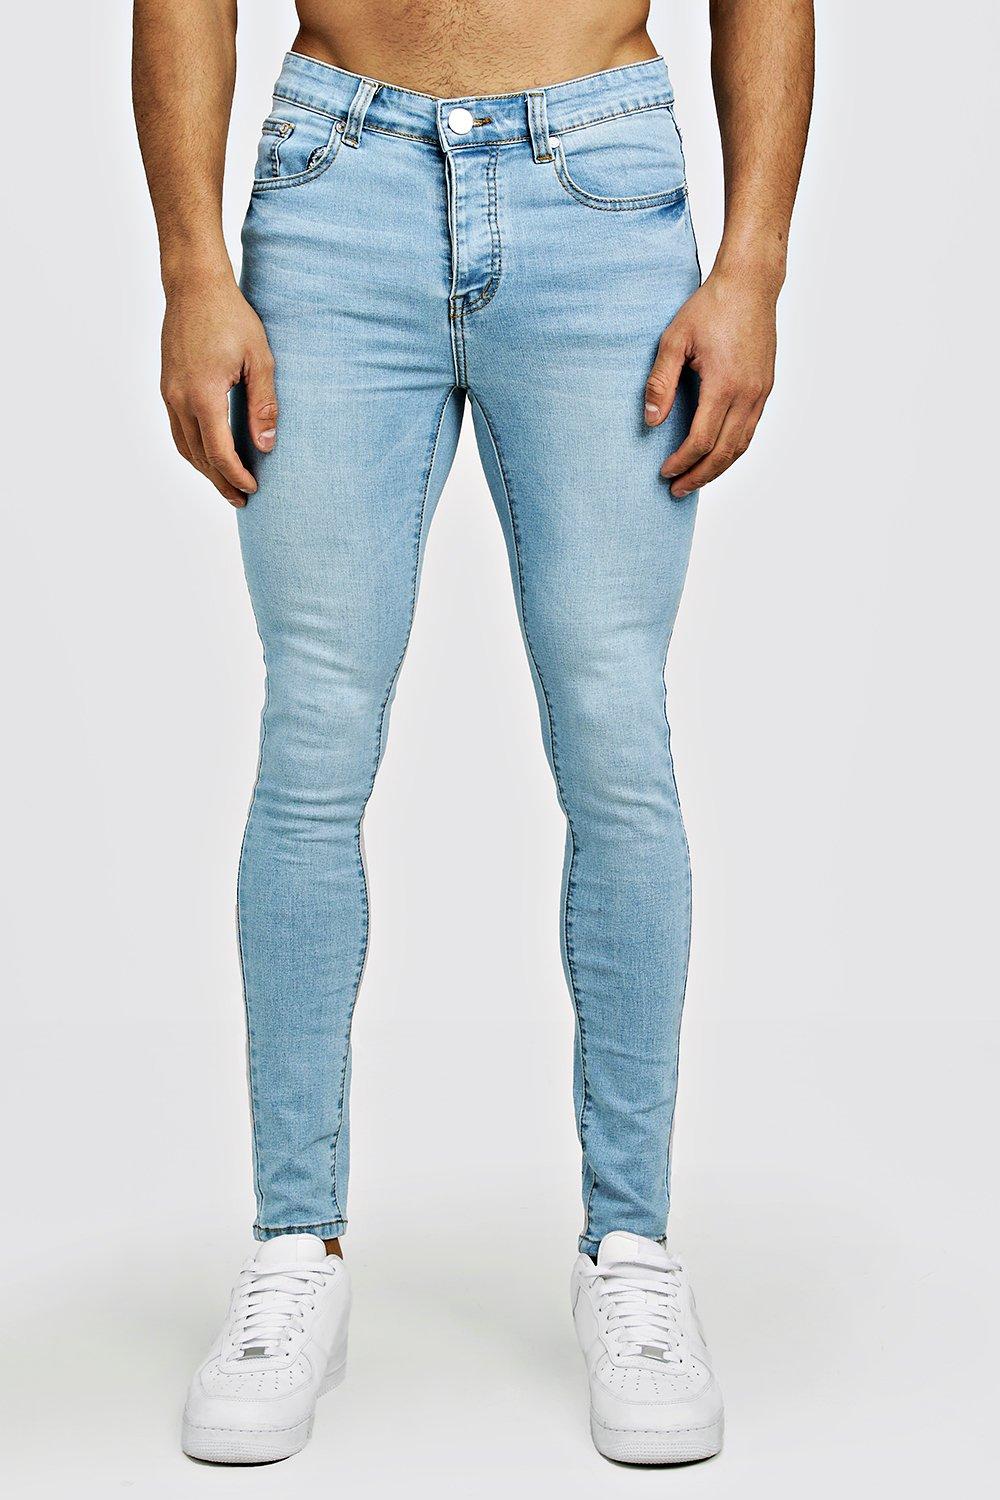 light blue skinny jeans